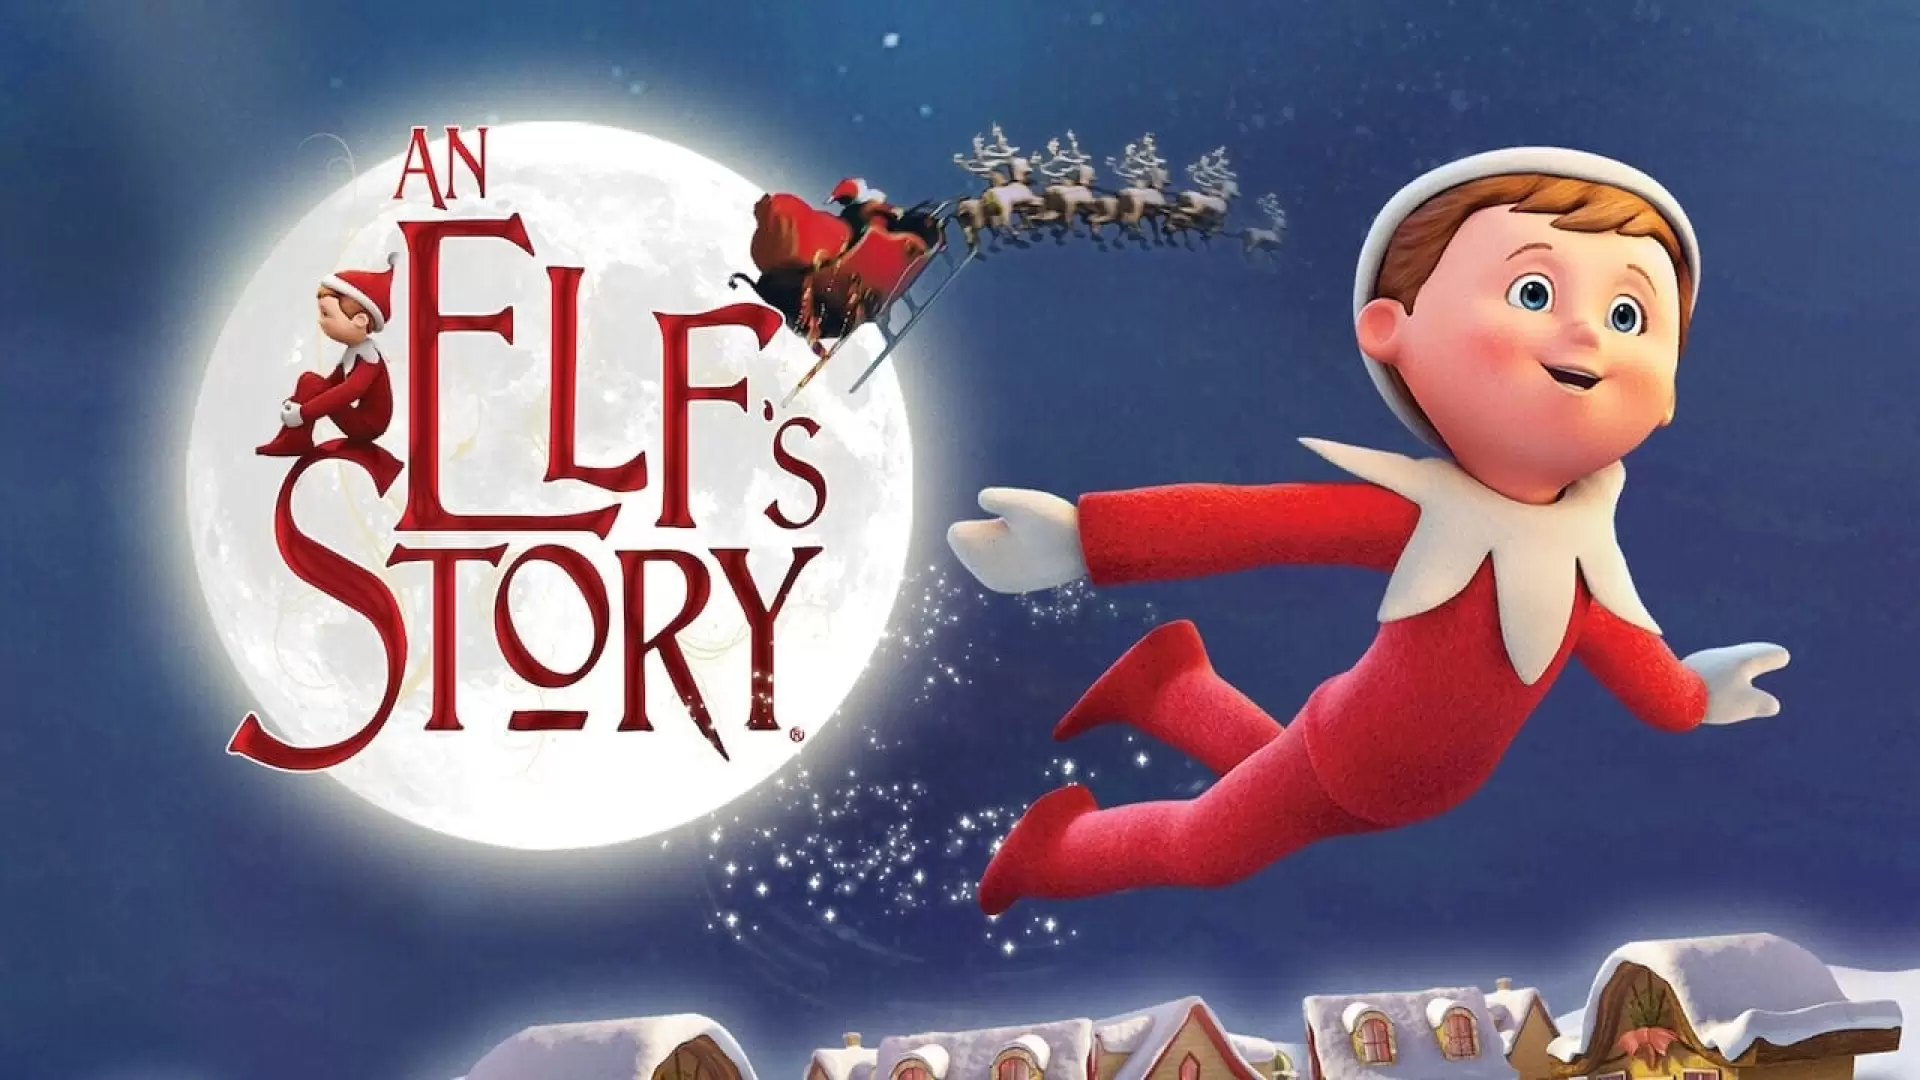 دانلود انیمیشن An Elf’s Story: The Elf on the Shelf 2011